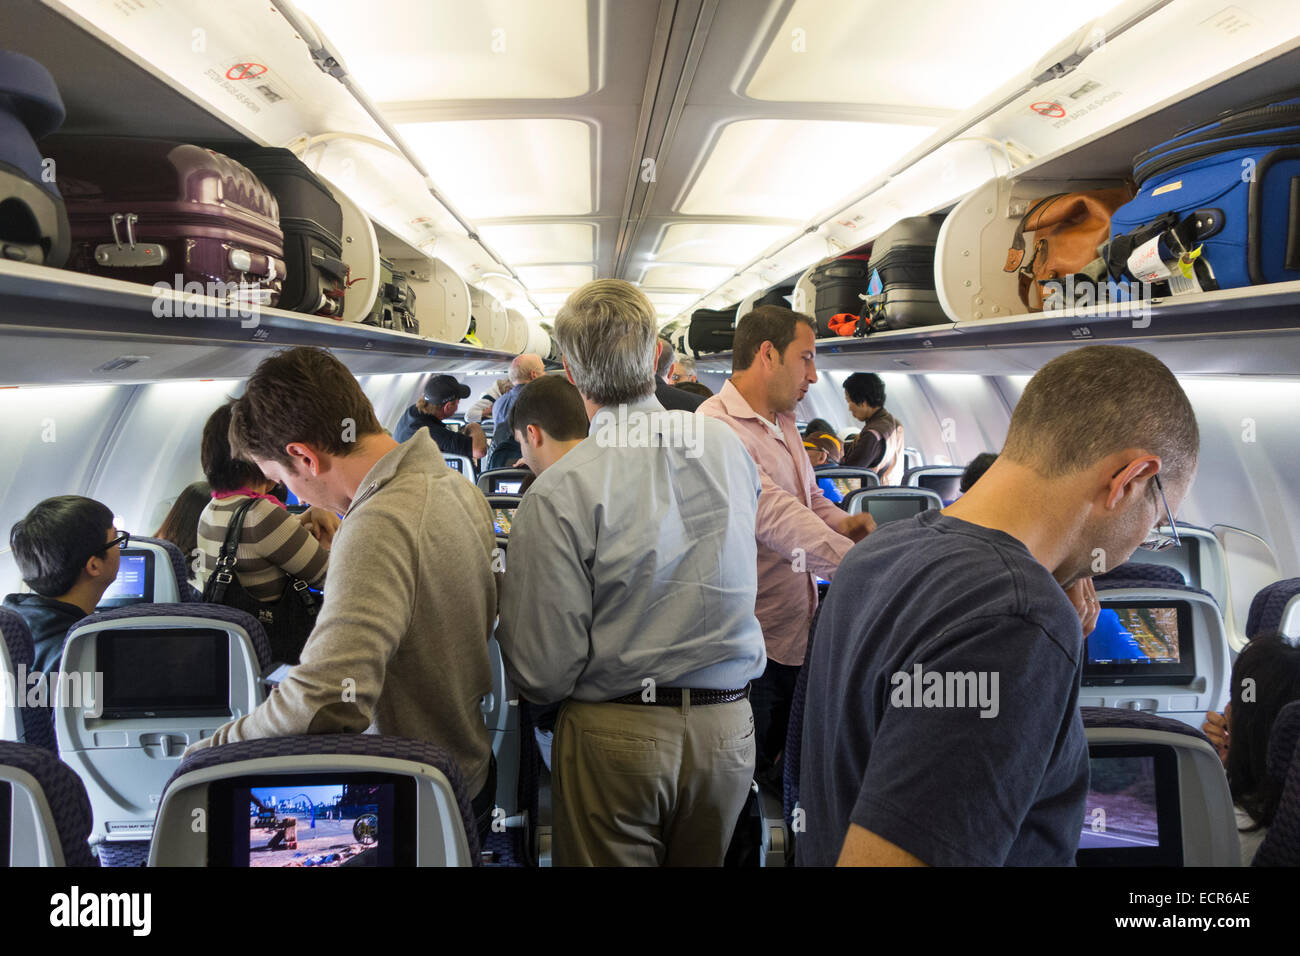 passengers on United Airlines airplane JFK airport Stock Photo